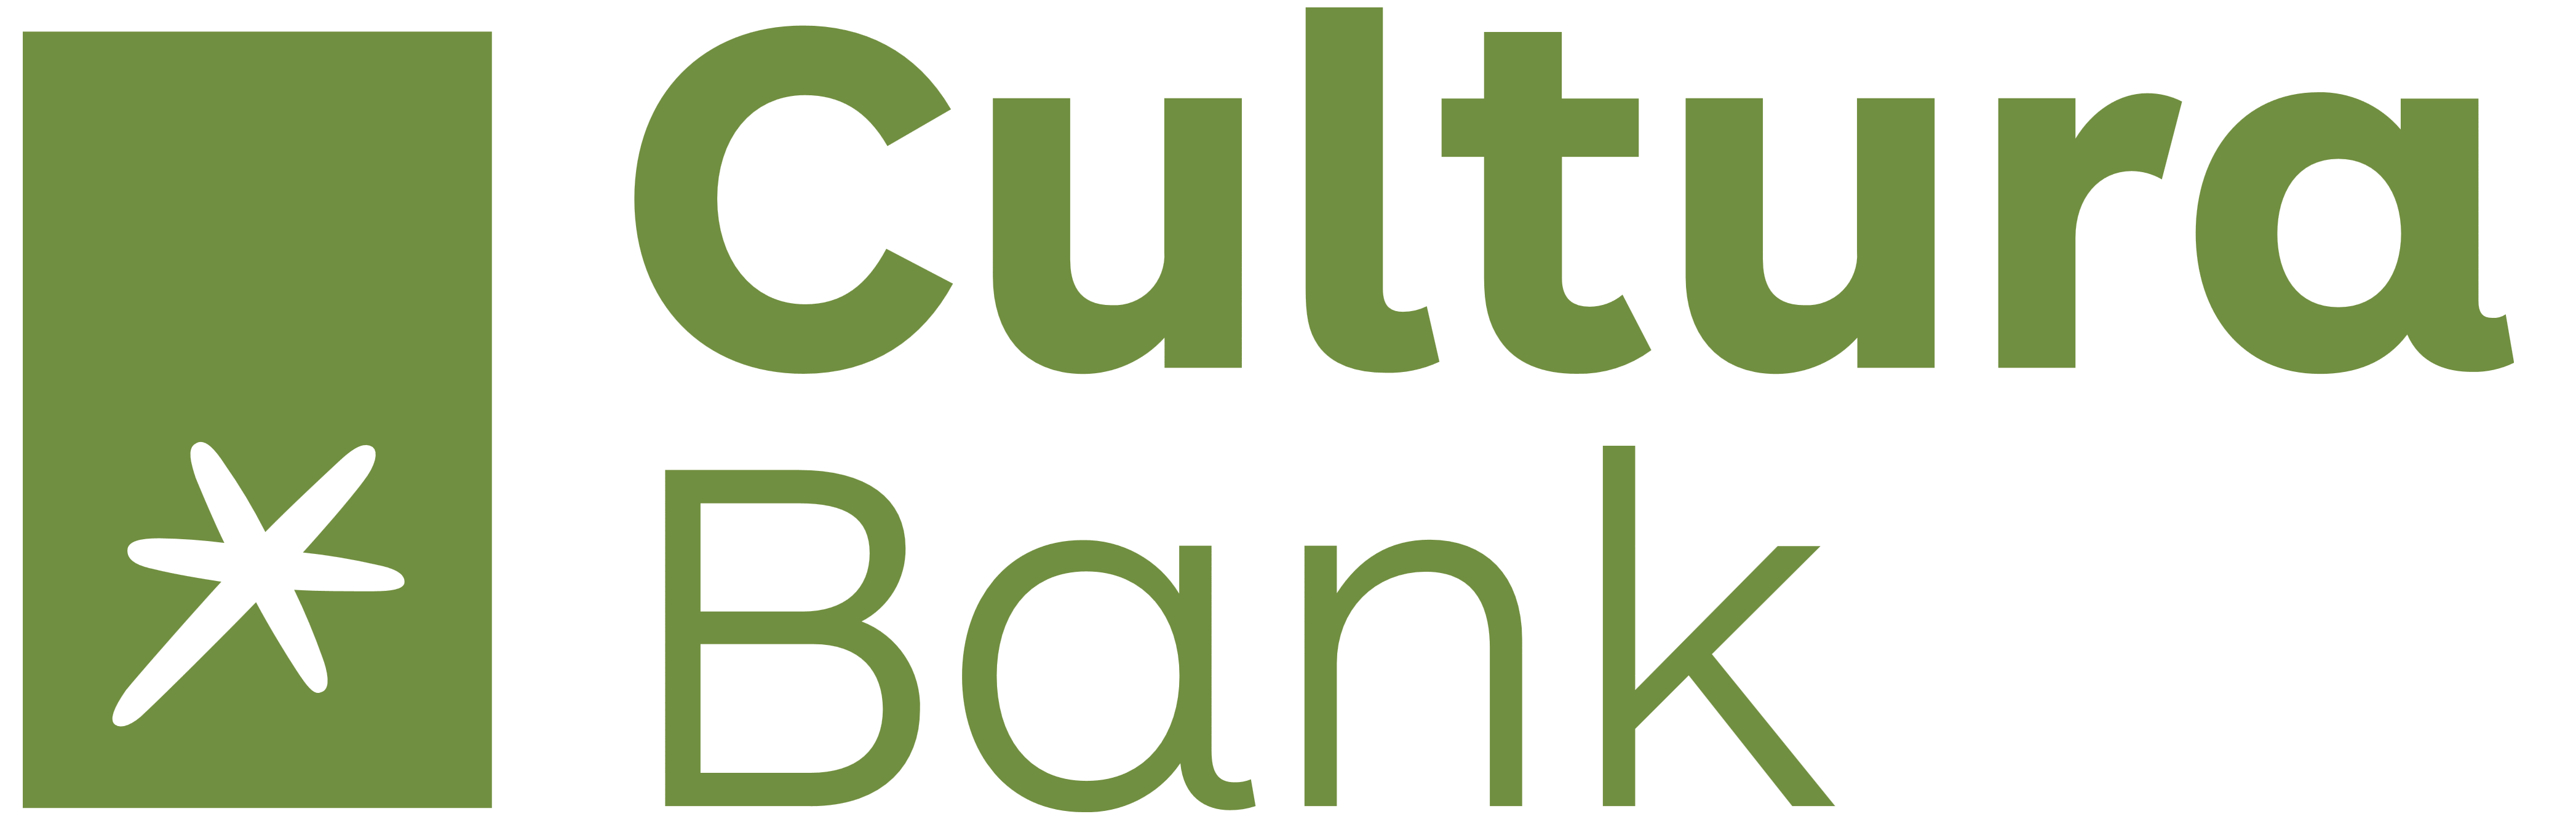 Cultura Bank logo, logotype